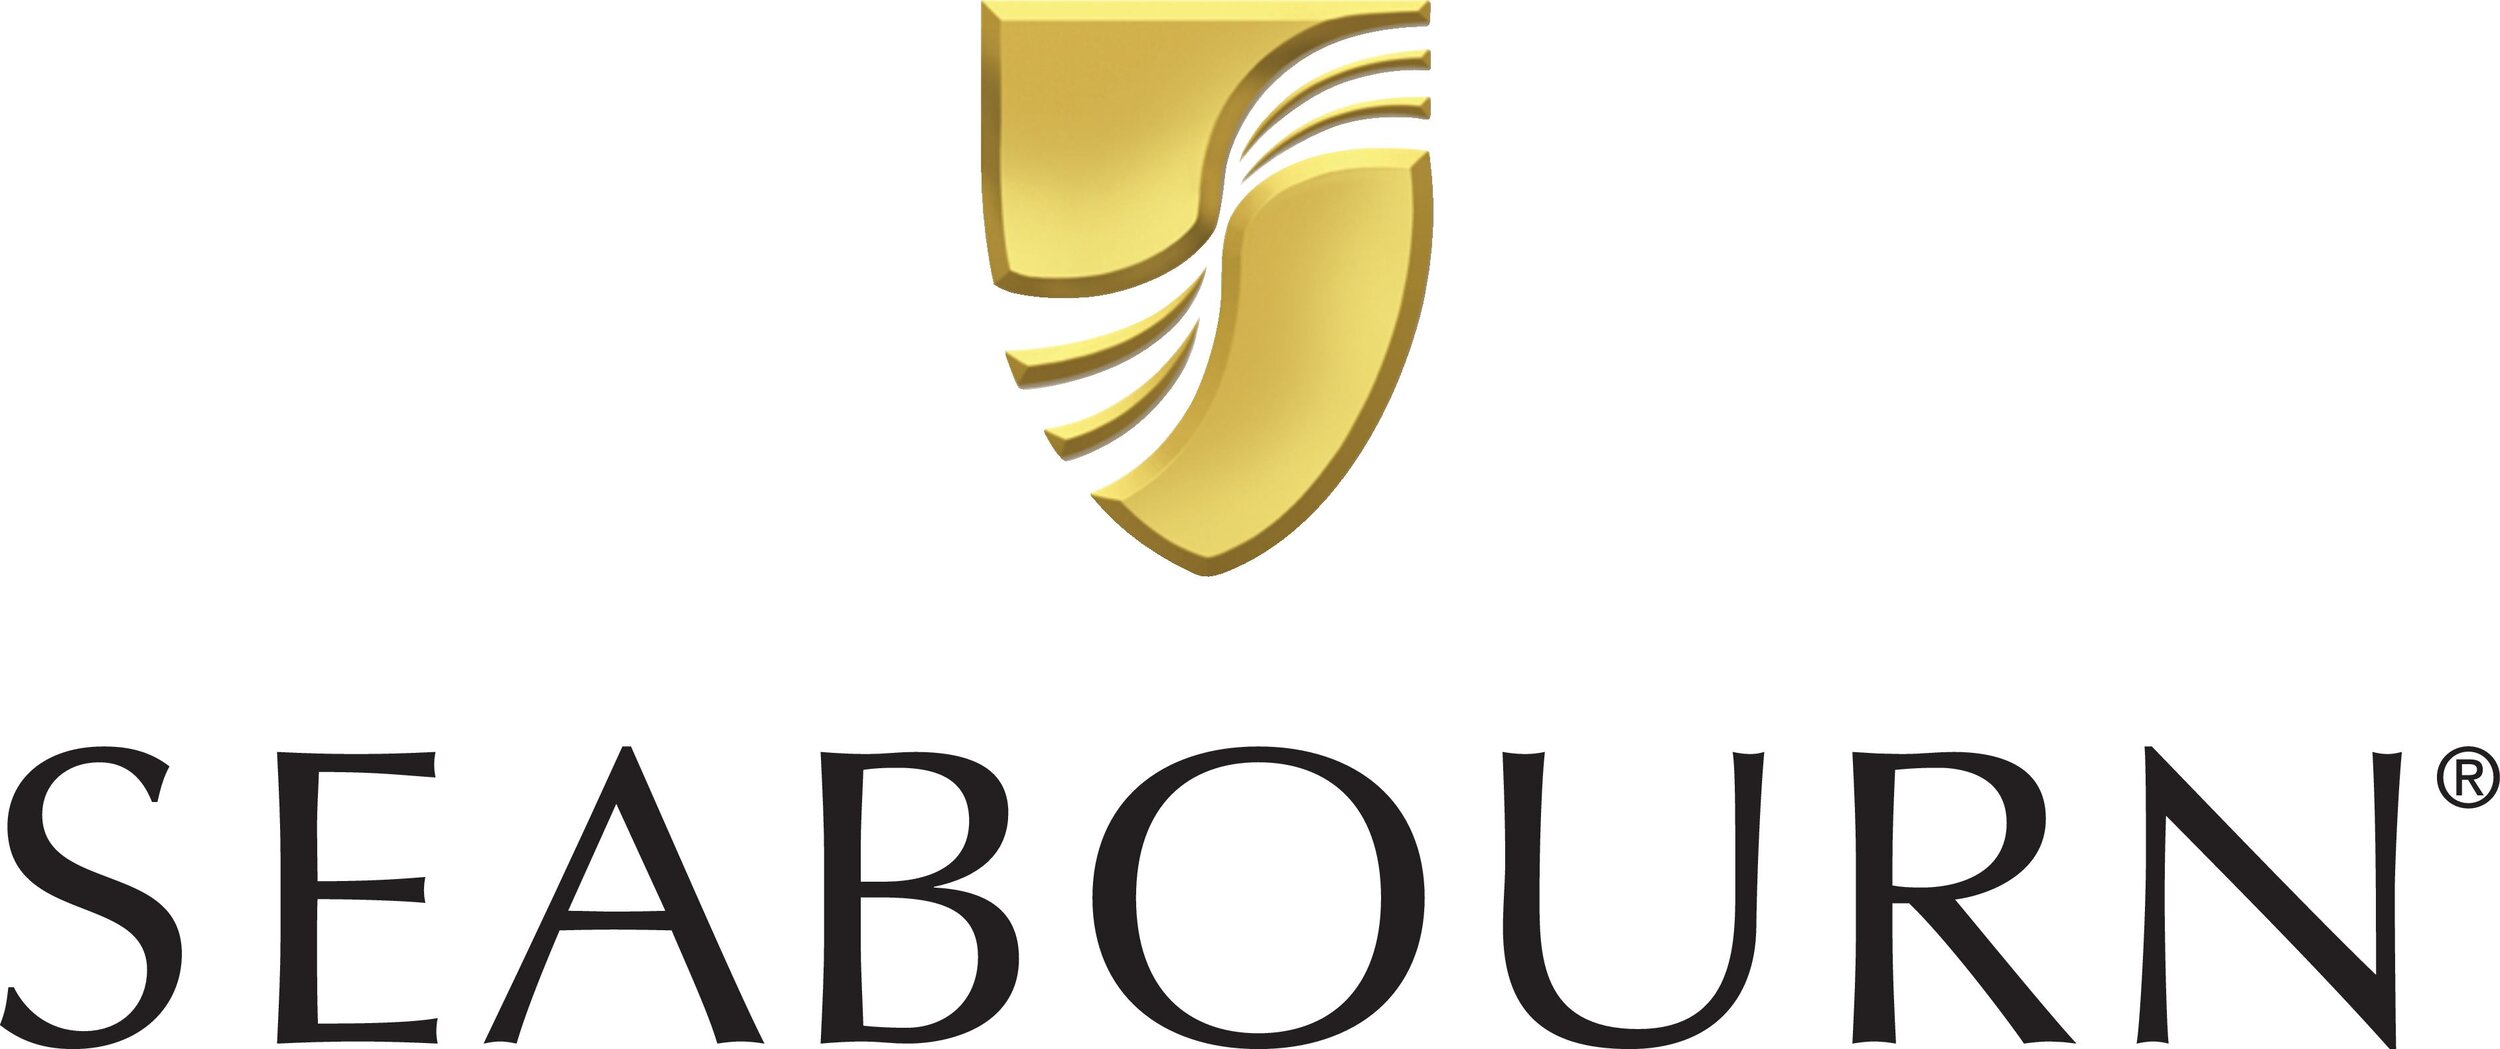 Seabourn_Logo.jpg